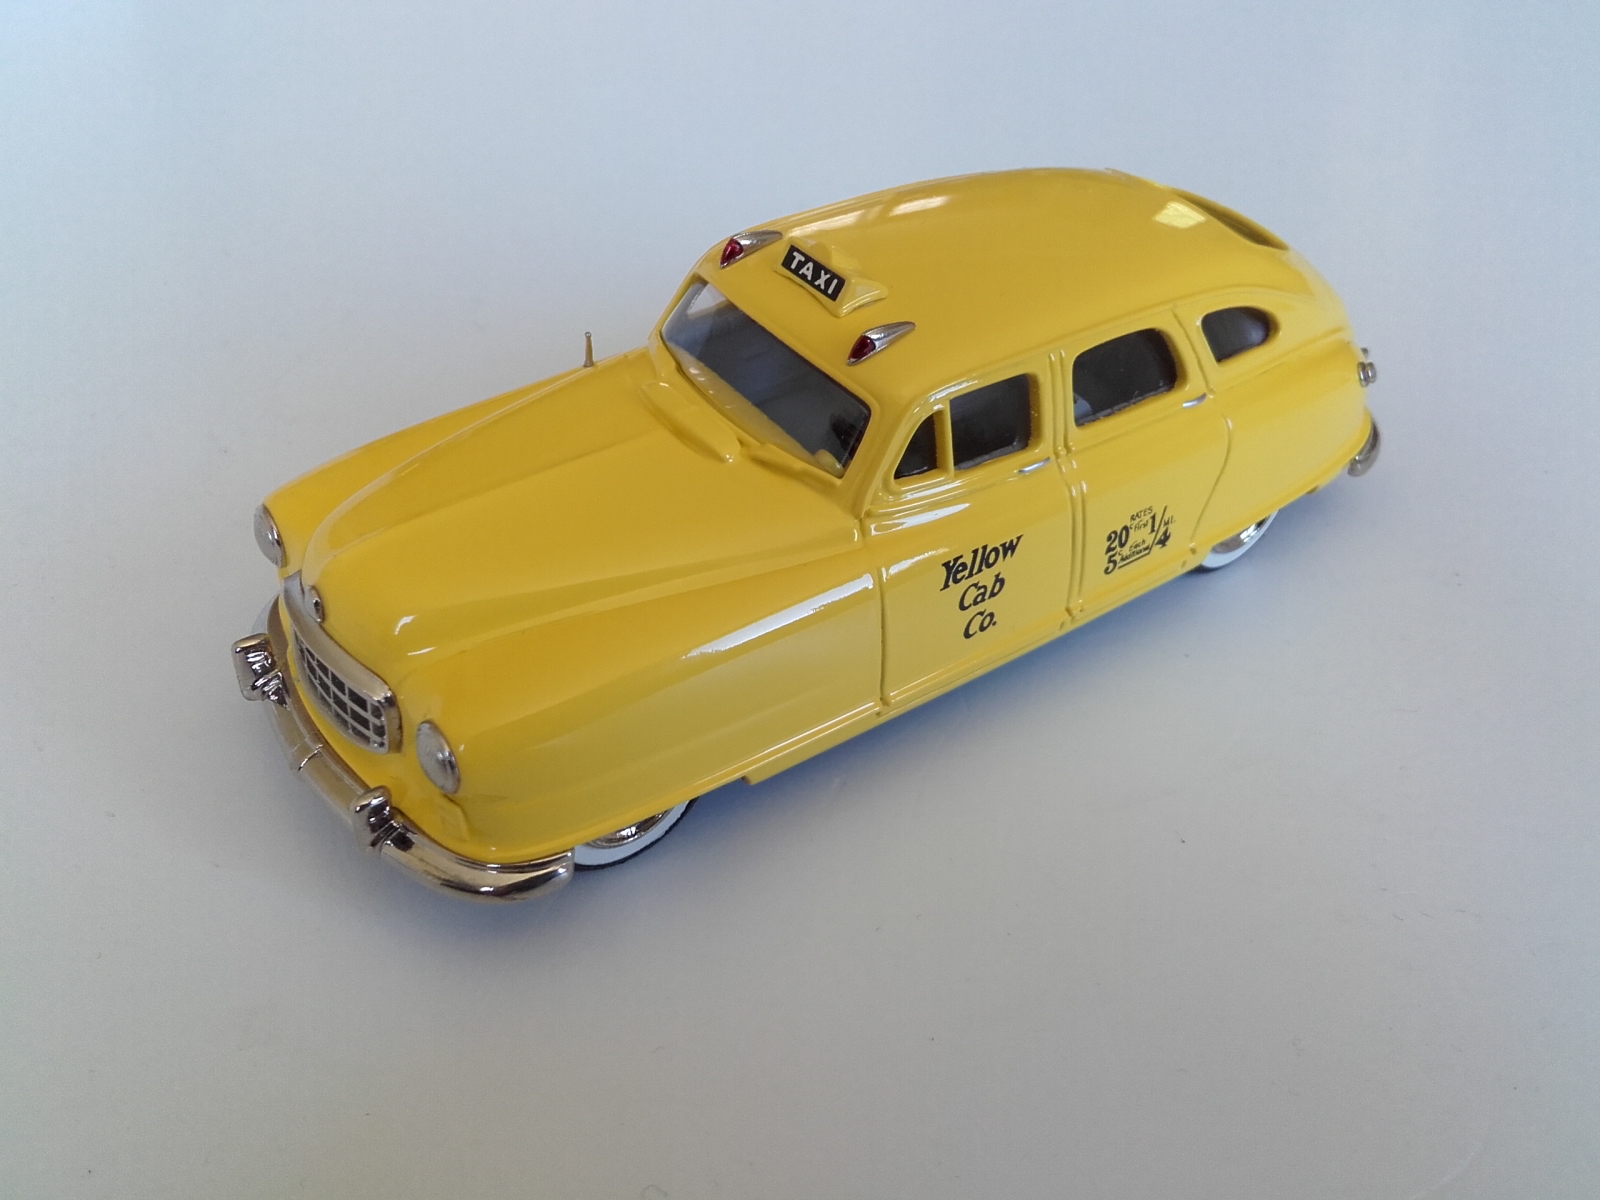 Motor City : Nash Yellow cab 1949